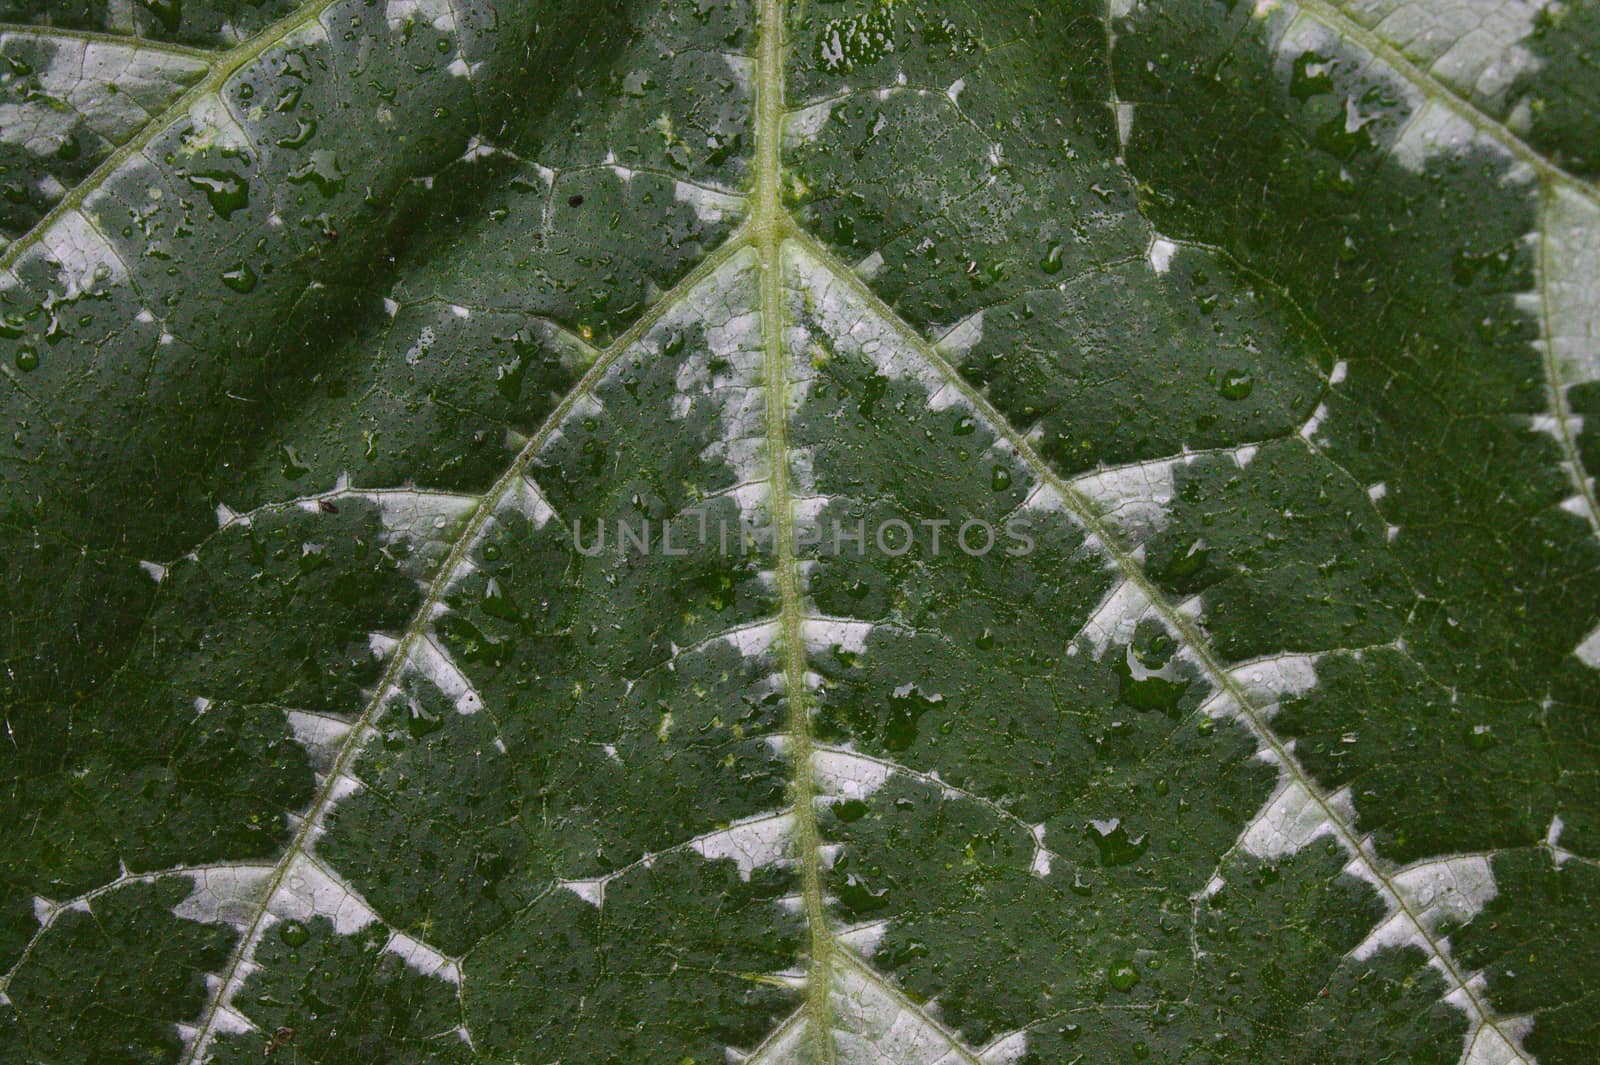 structure of a green leaf by martina_unbehauen